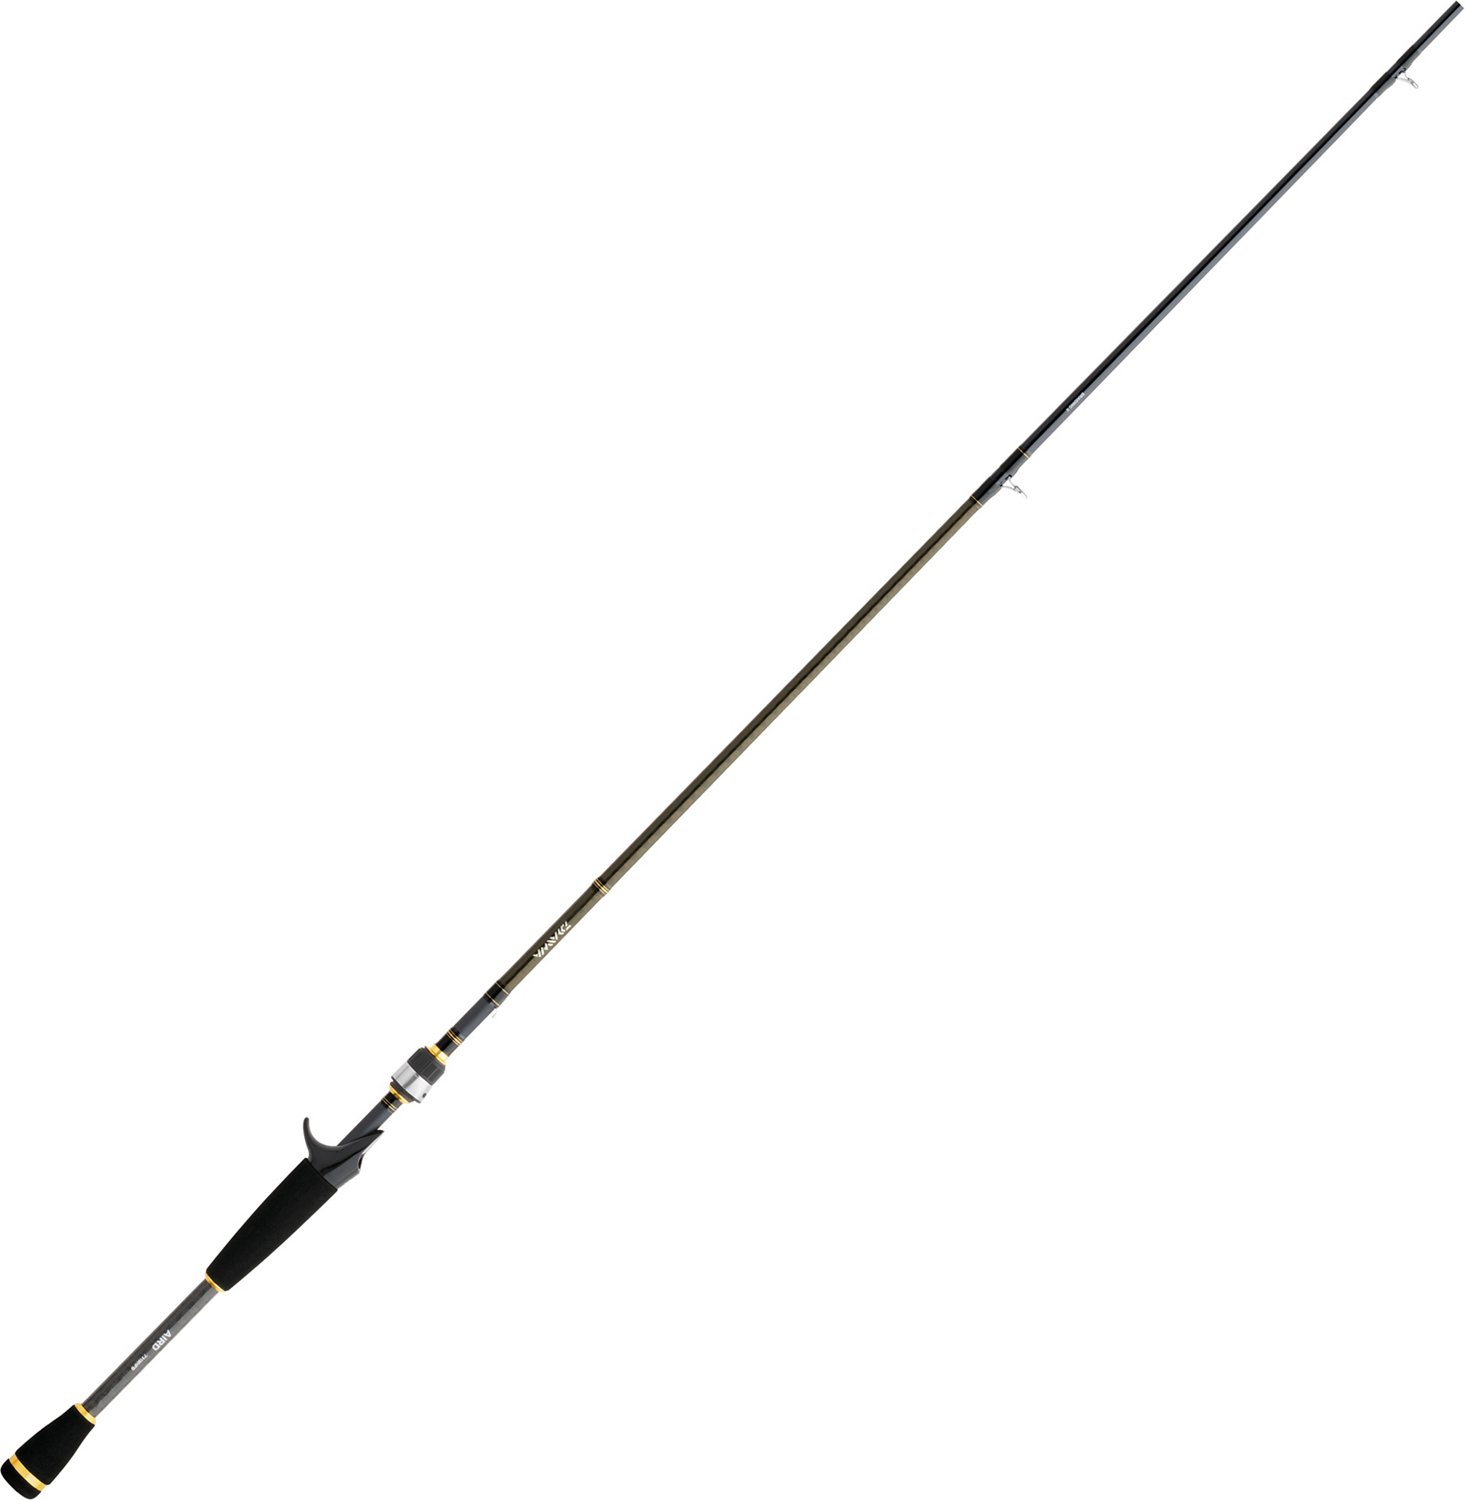 Diawa 200 Series 212A Spinning Casting Fishing Rod w/ True Temper